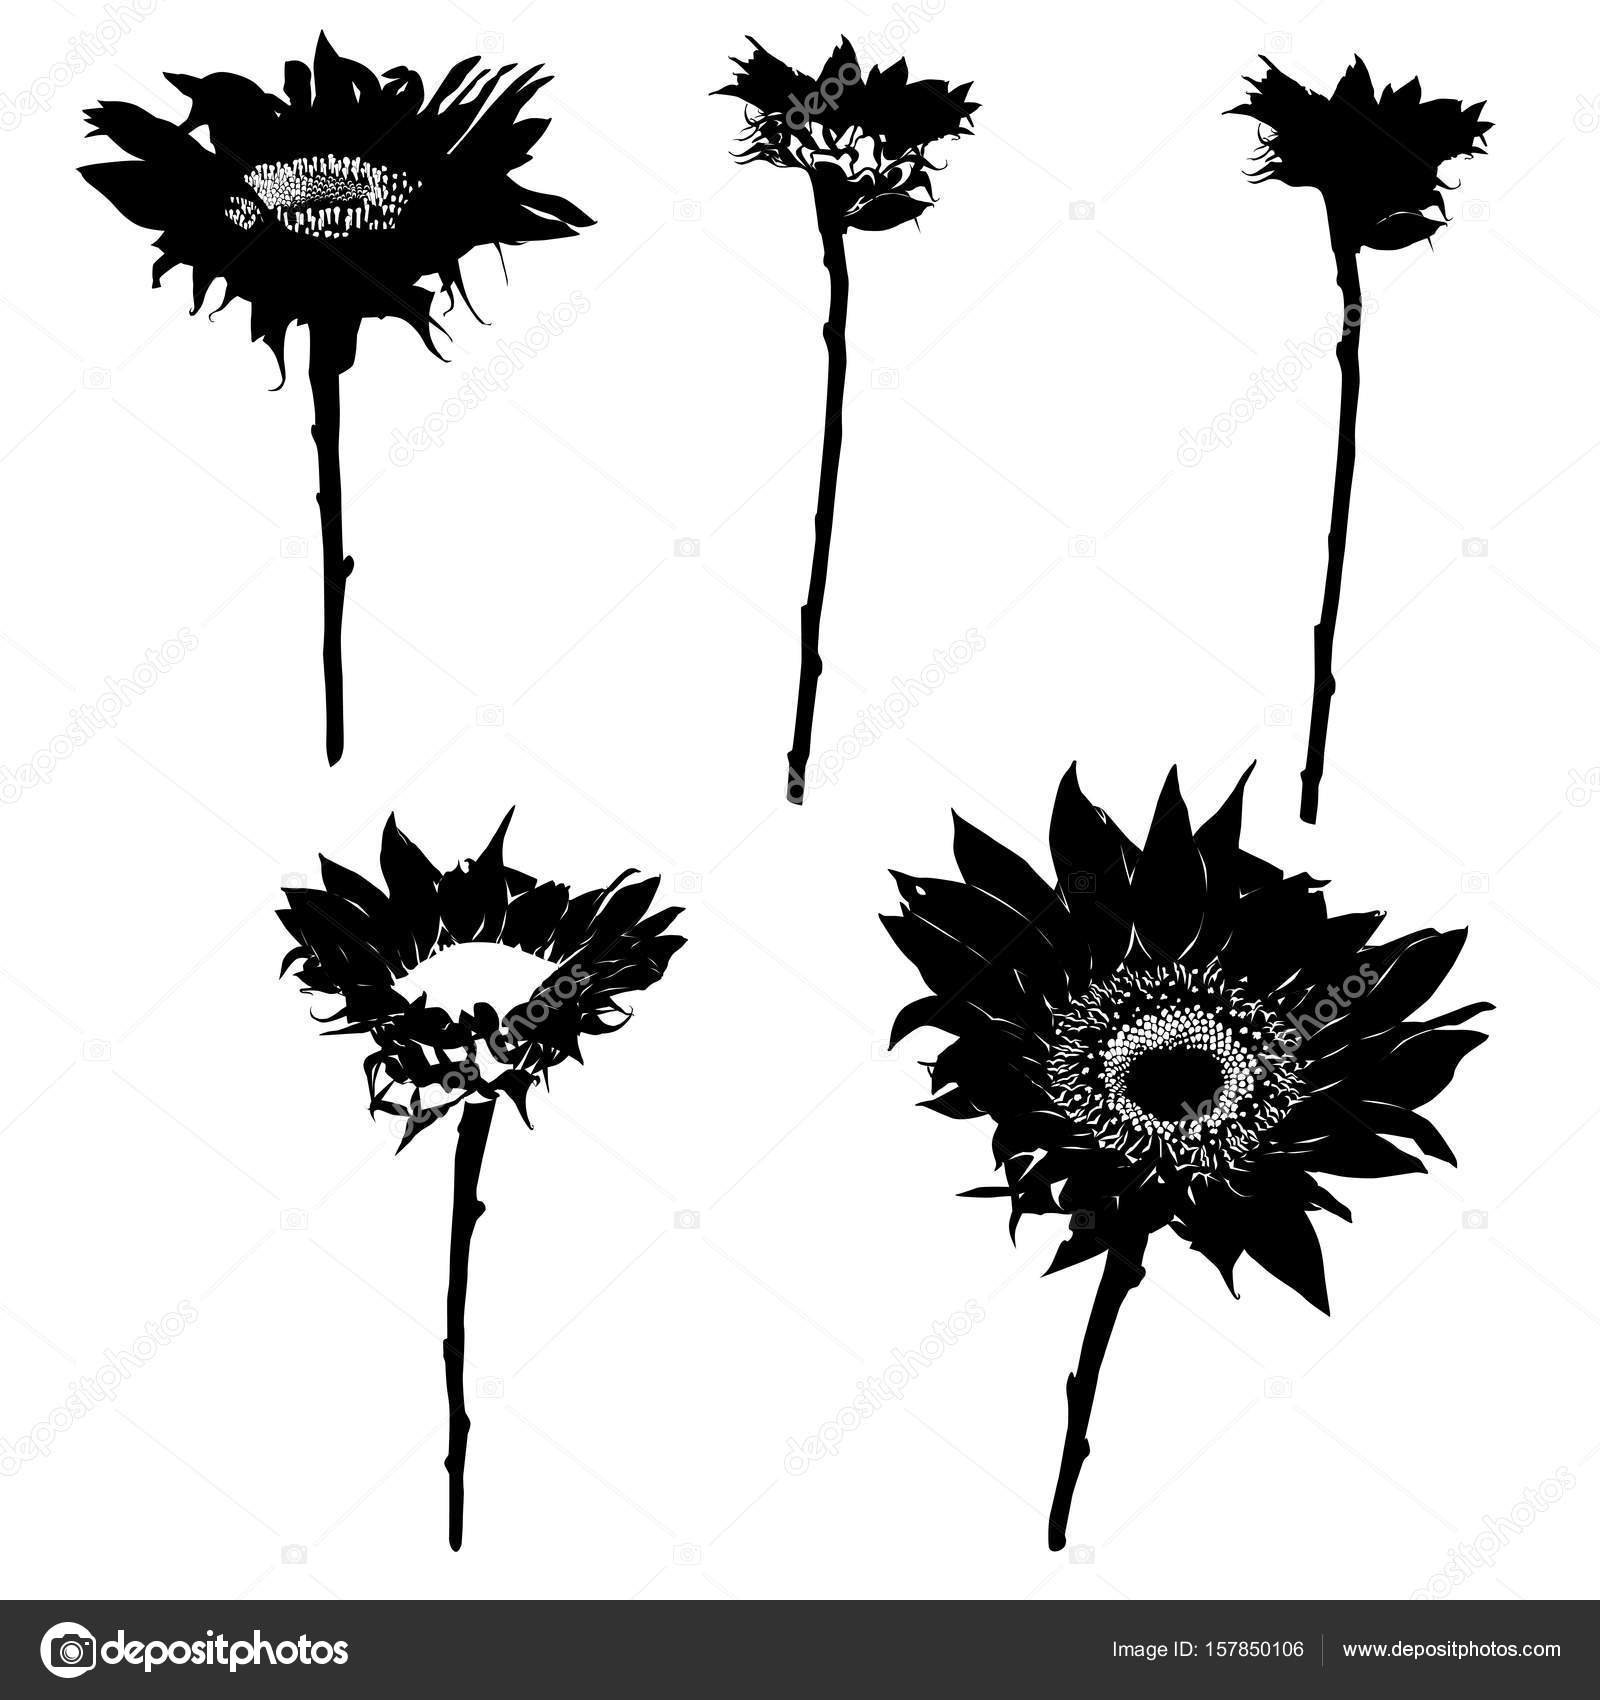 sunflower silhouettes series — Stock Photo © richcat #157850106